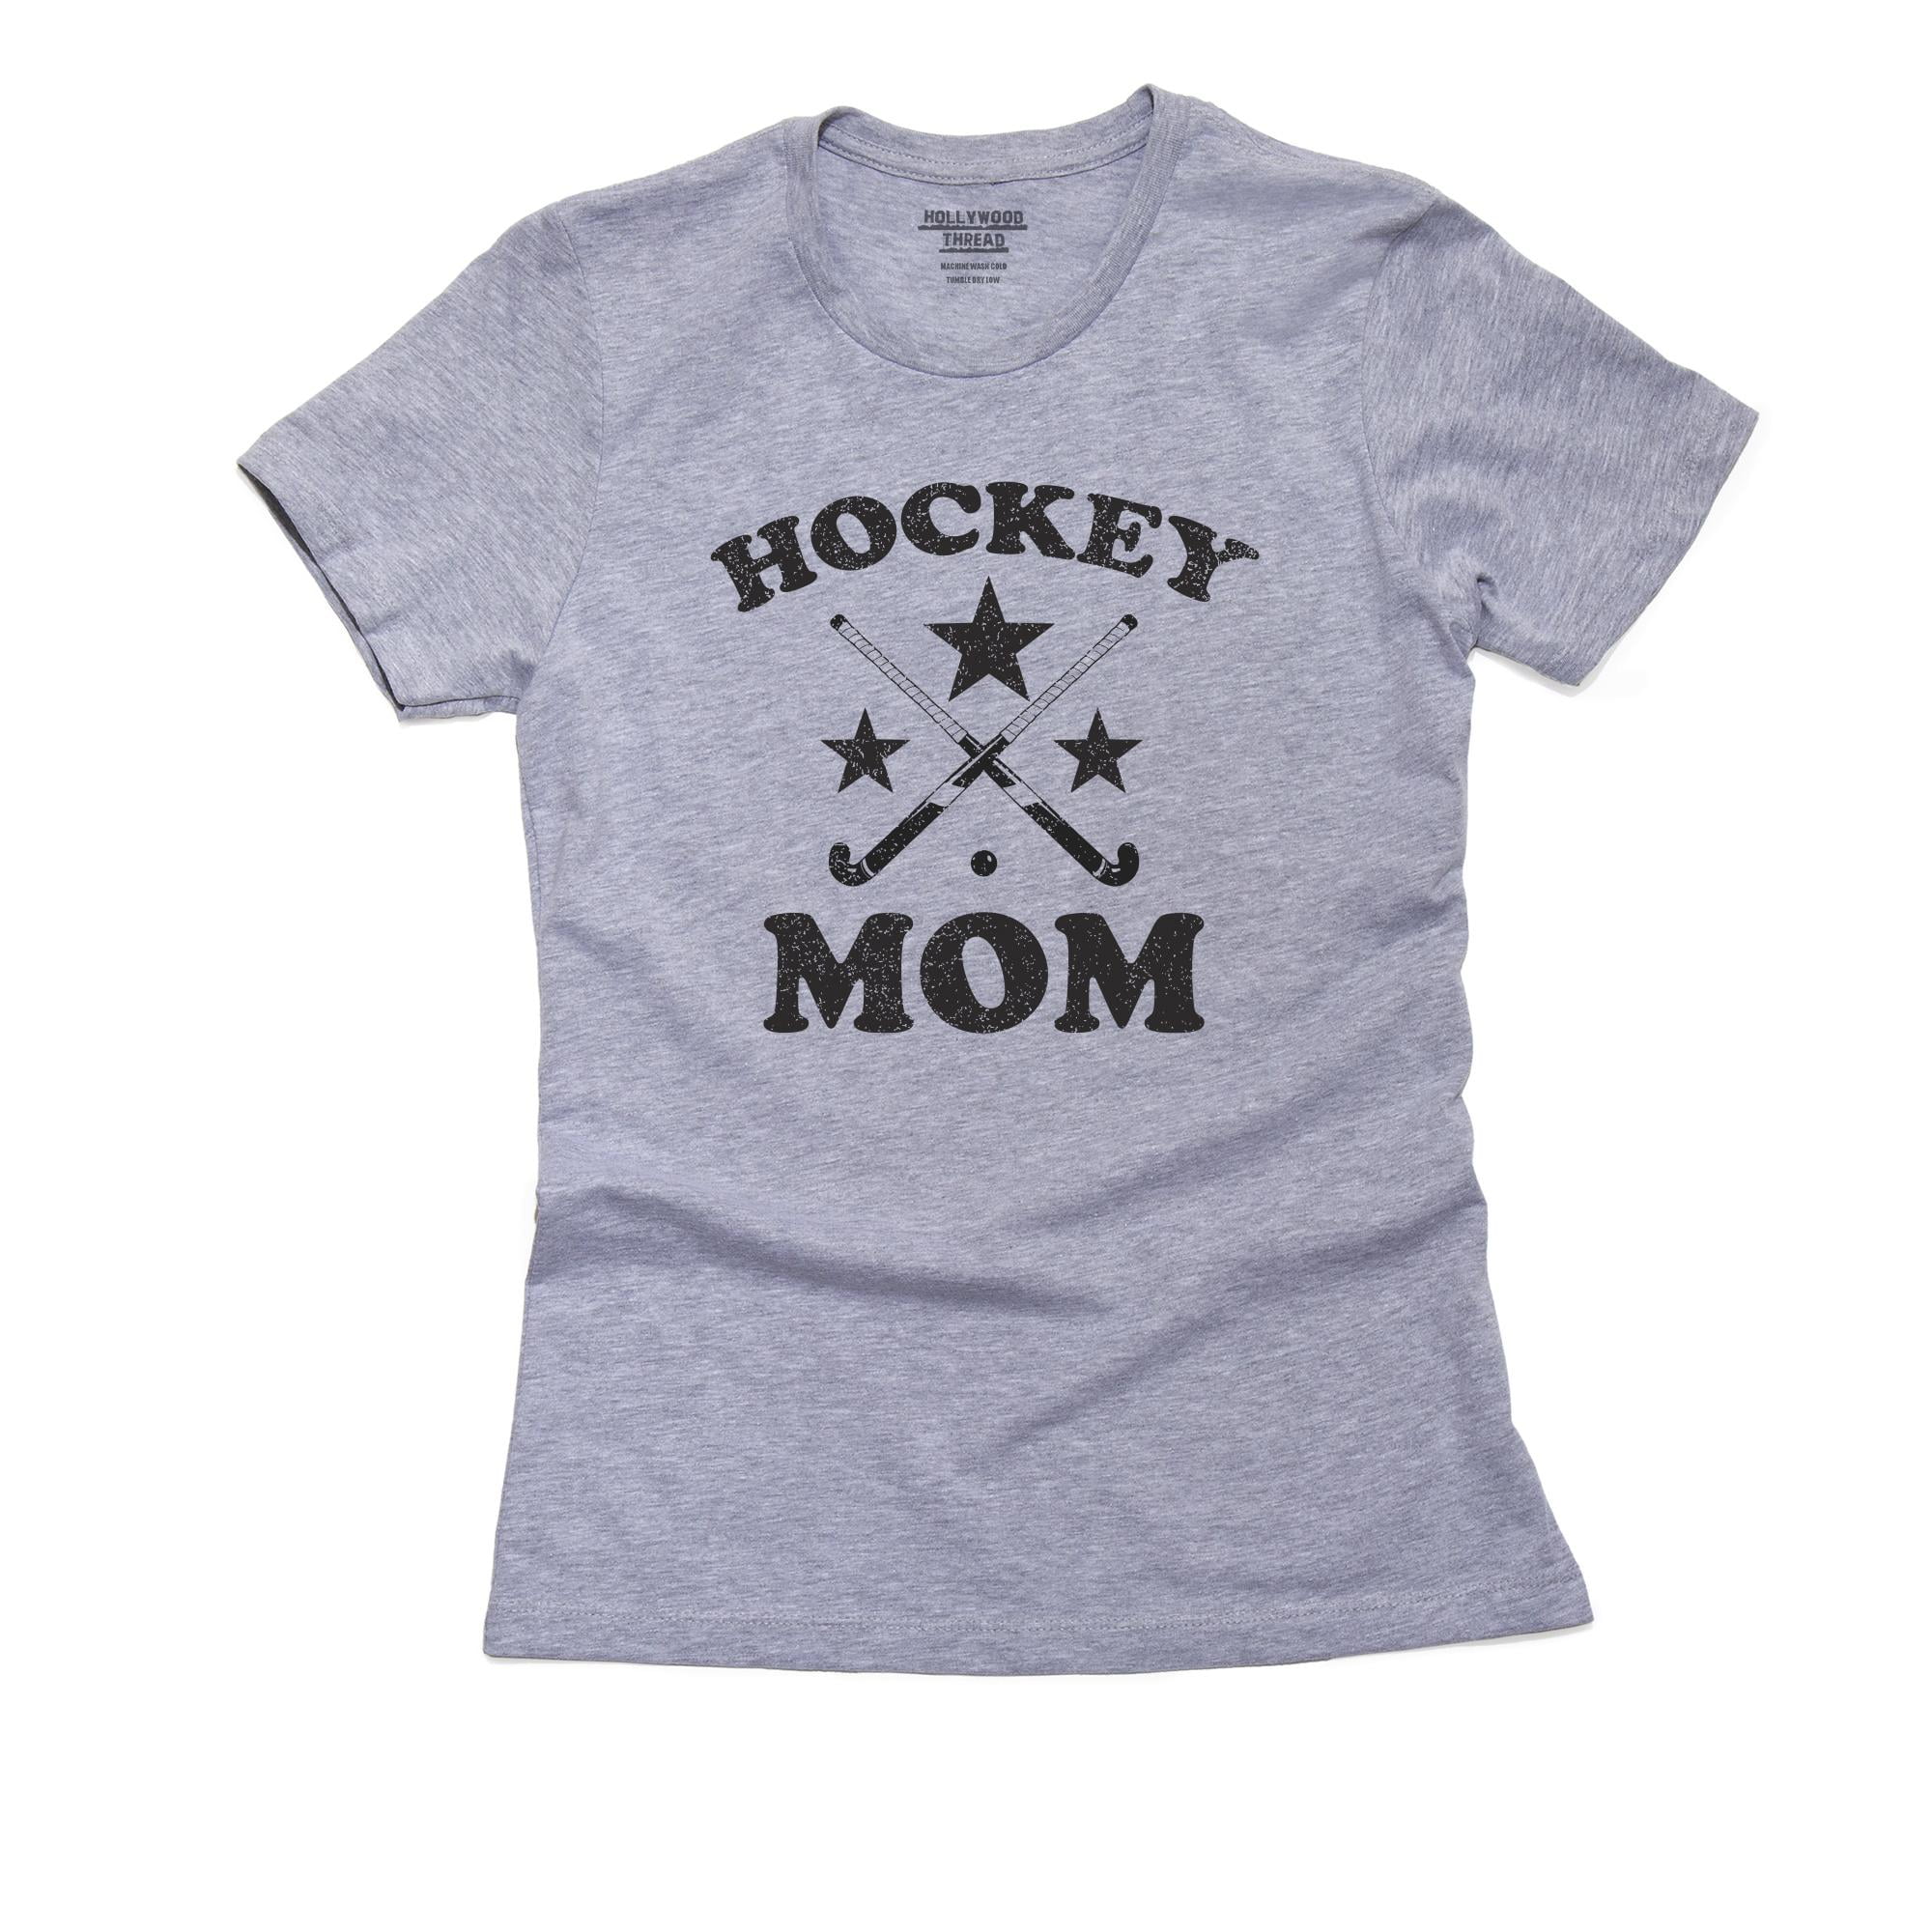 Super Cool Hockey Mom' Women's T-Shirt